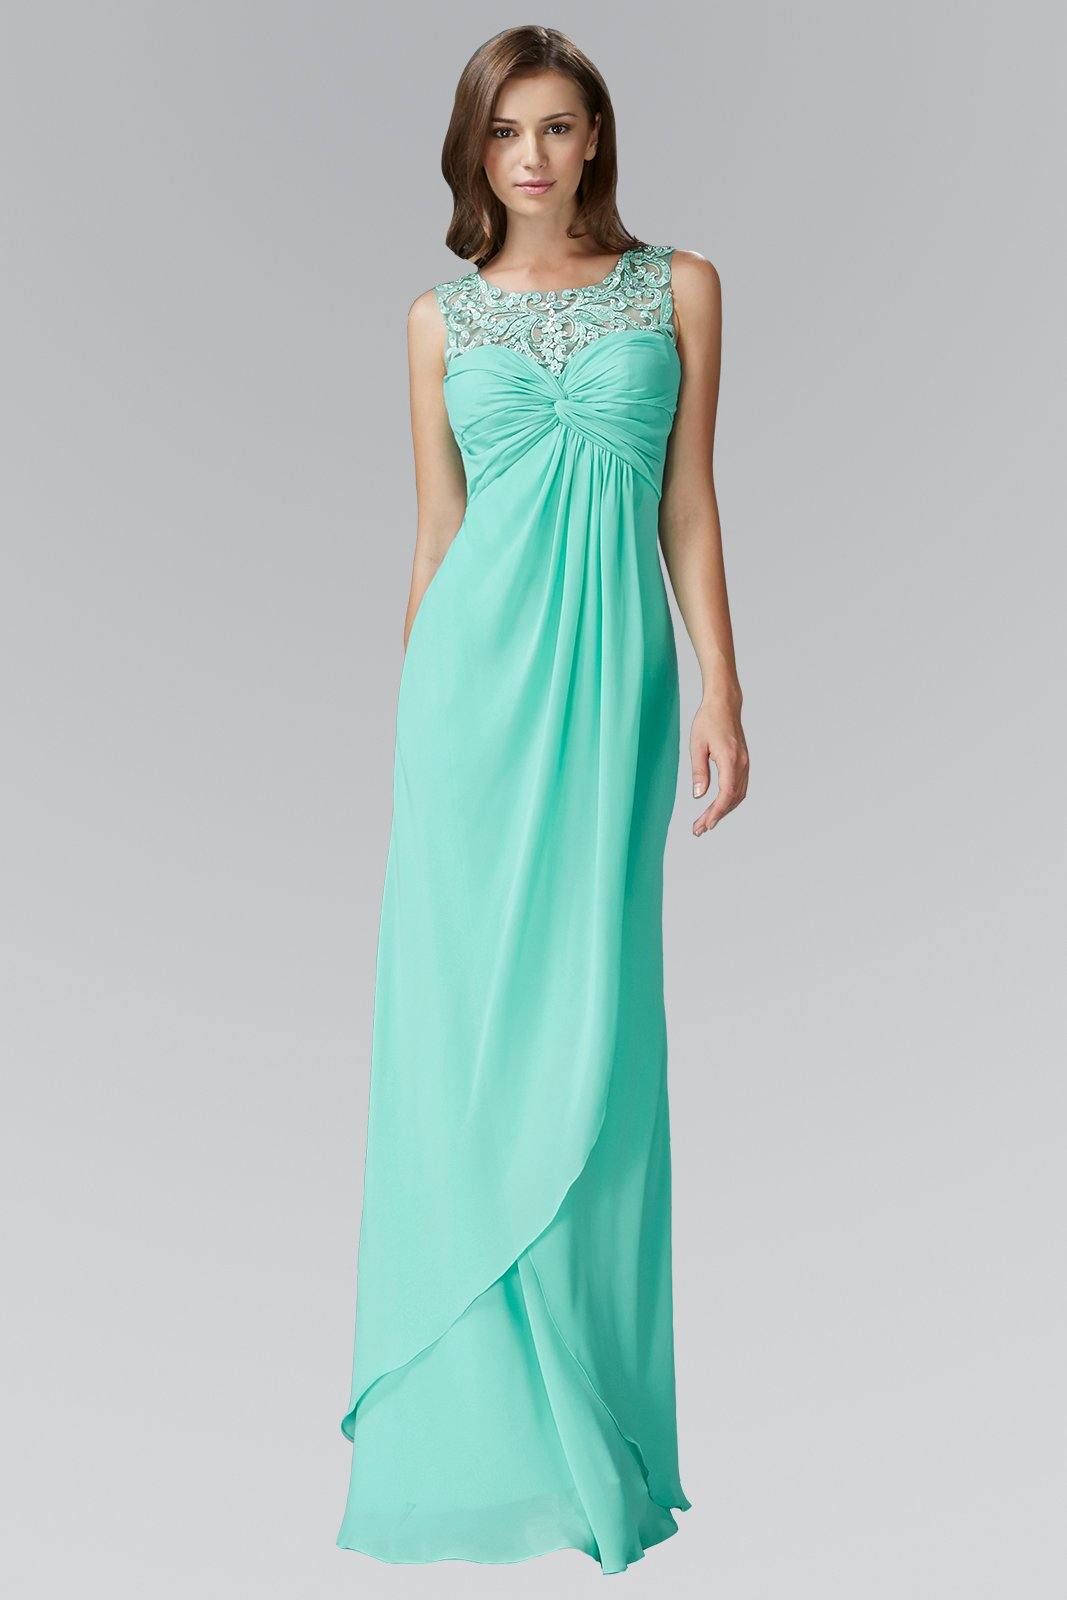 Empire Line Prom Long Dress - The Dress Outlet Elizabeth K